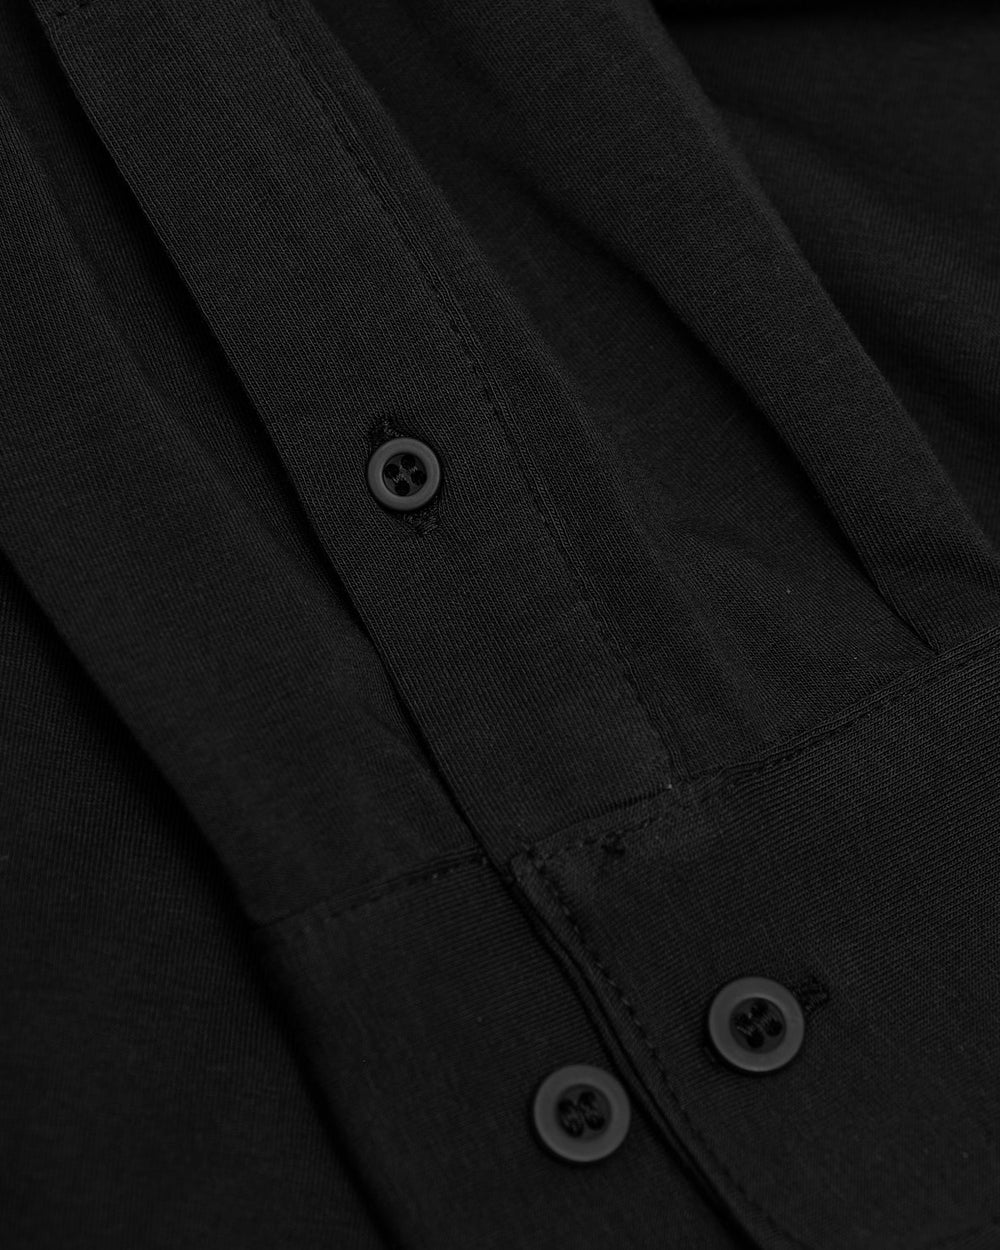 Black Long Sleeve Do-It-All Comfort Shirt